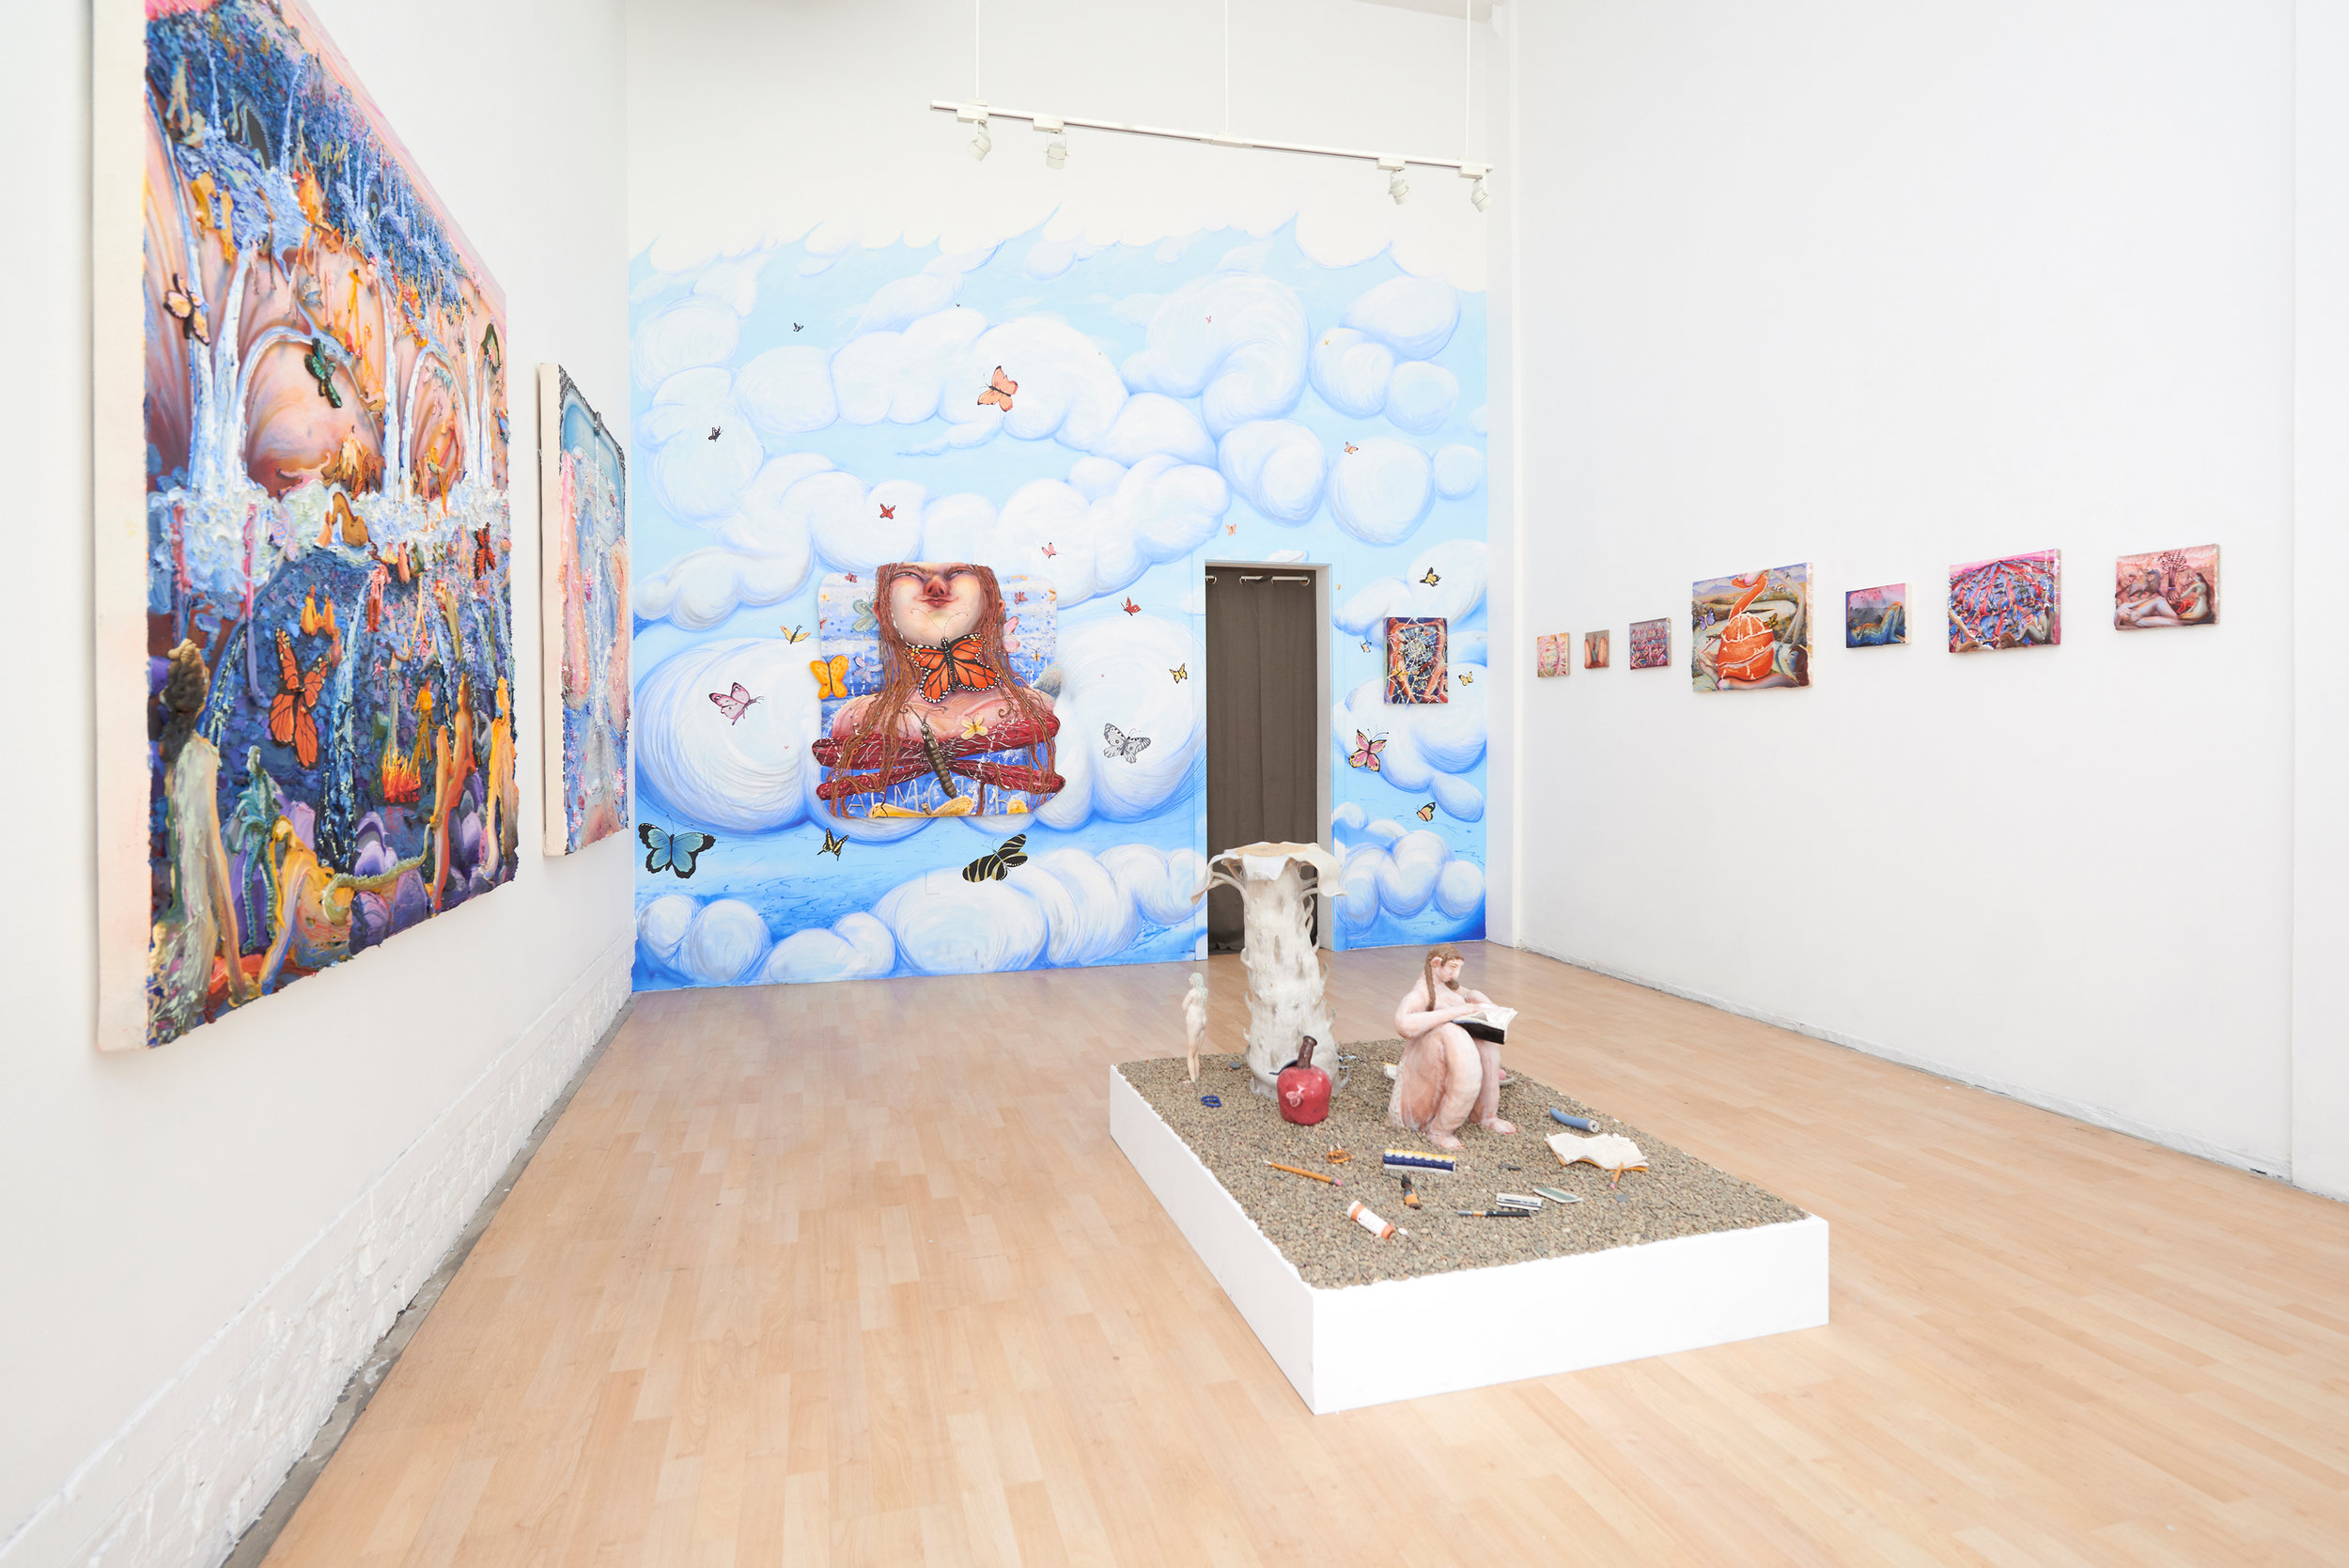  Installation view from “Pith” at Hashimoto Contemporary, 2018, San Francisco, California.  